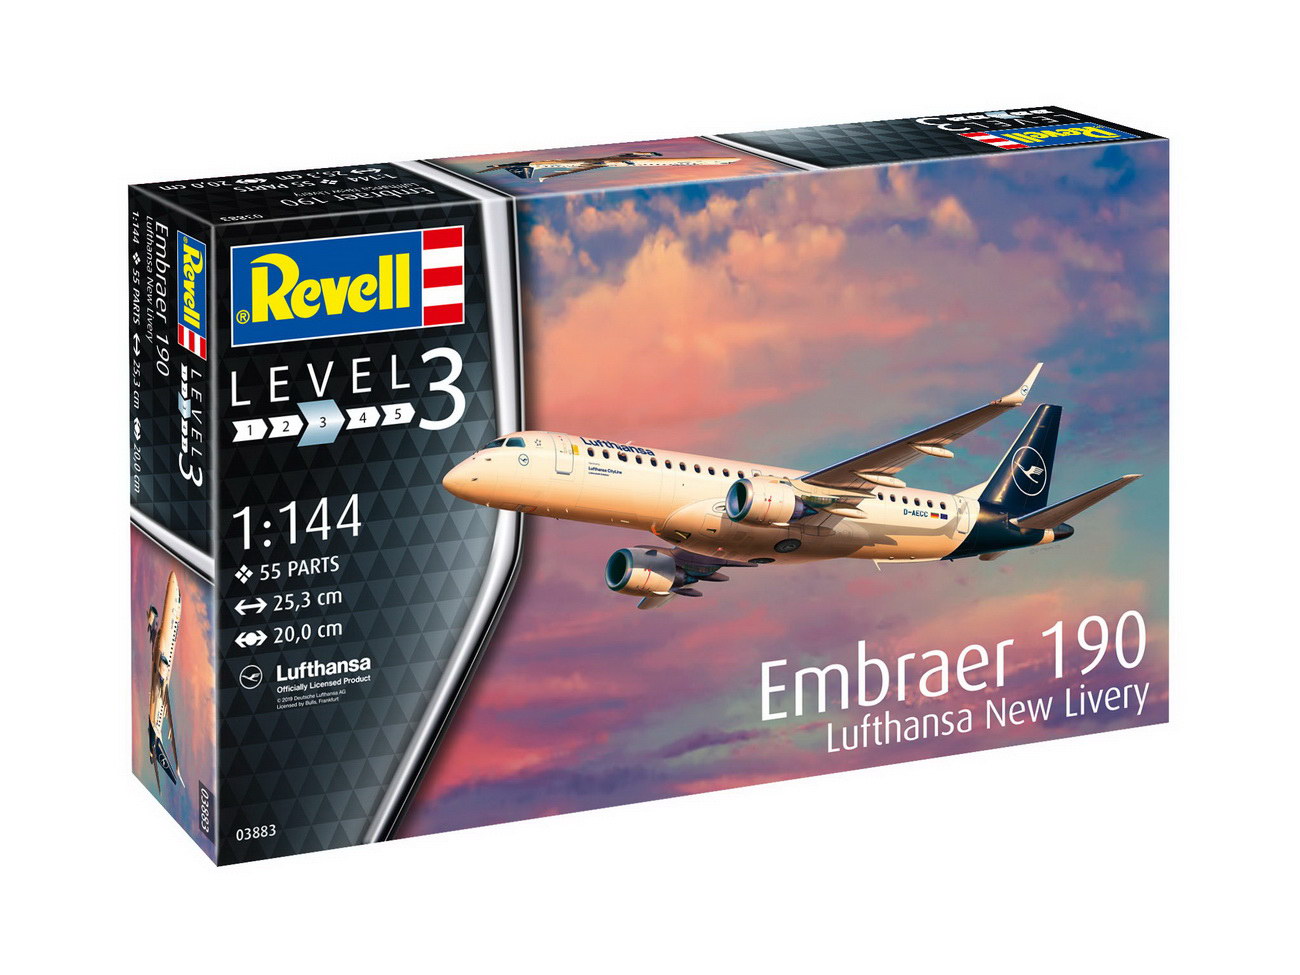 Revell 03883 - Embraer 190 Lufthansa New Livery